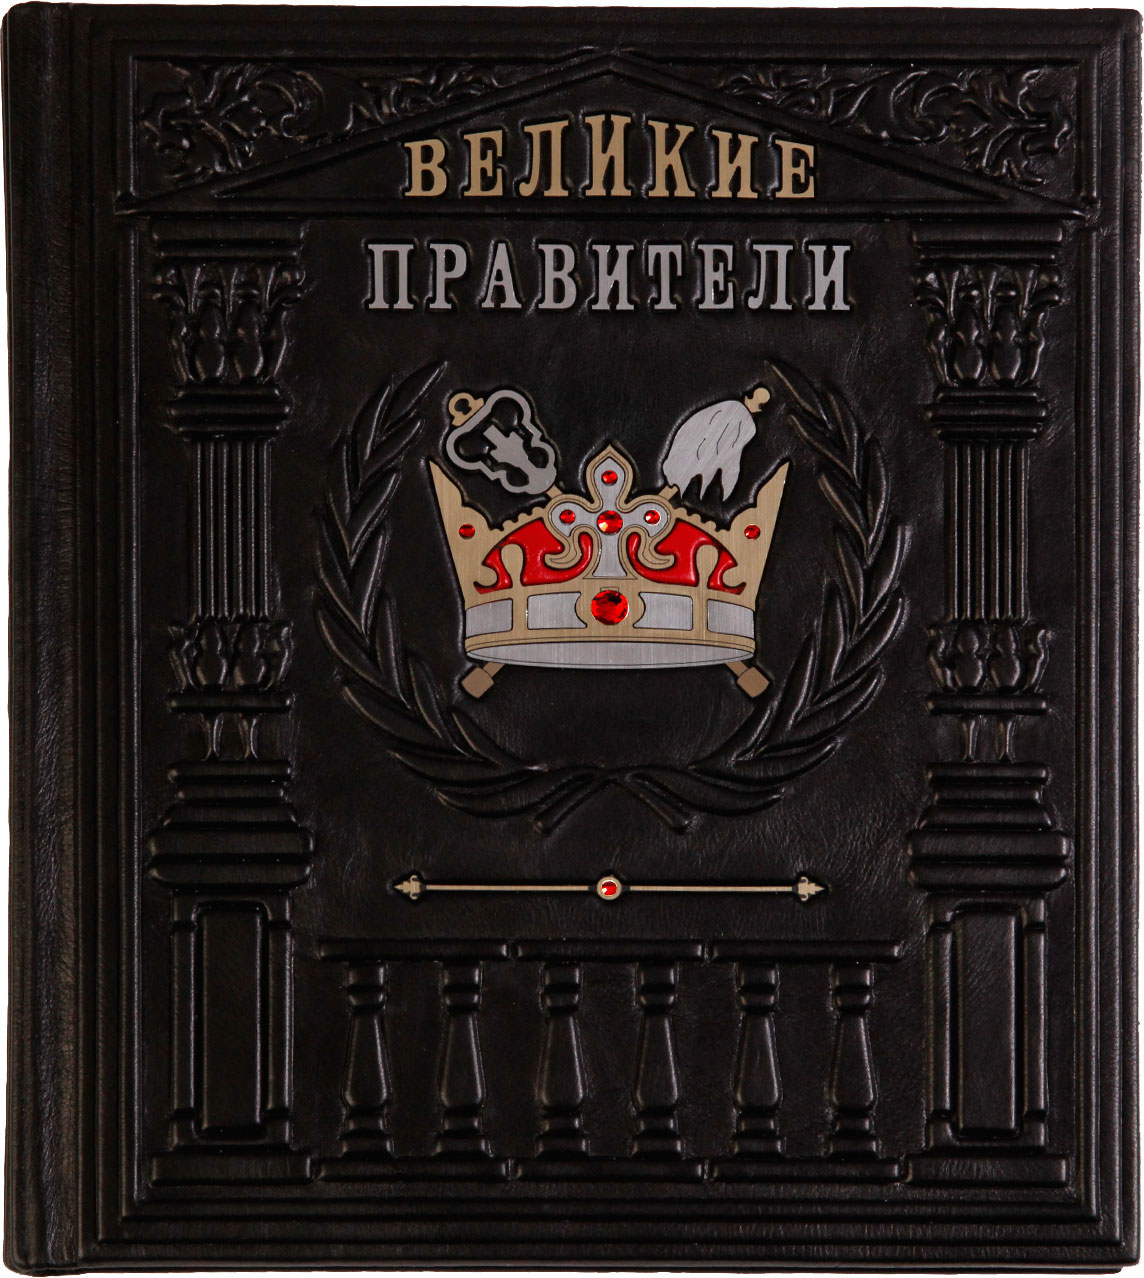 Набор книг "Великие", - 2 тома в коробе